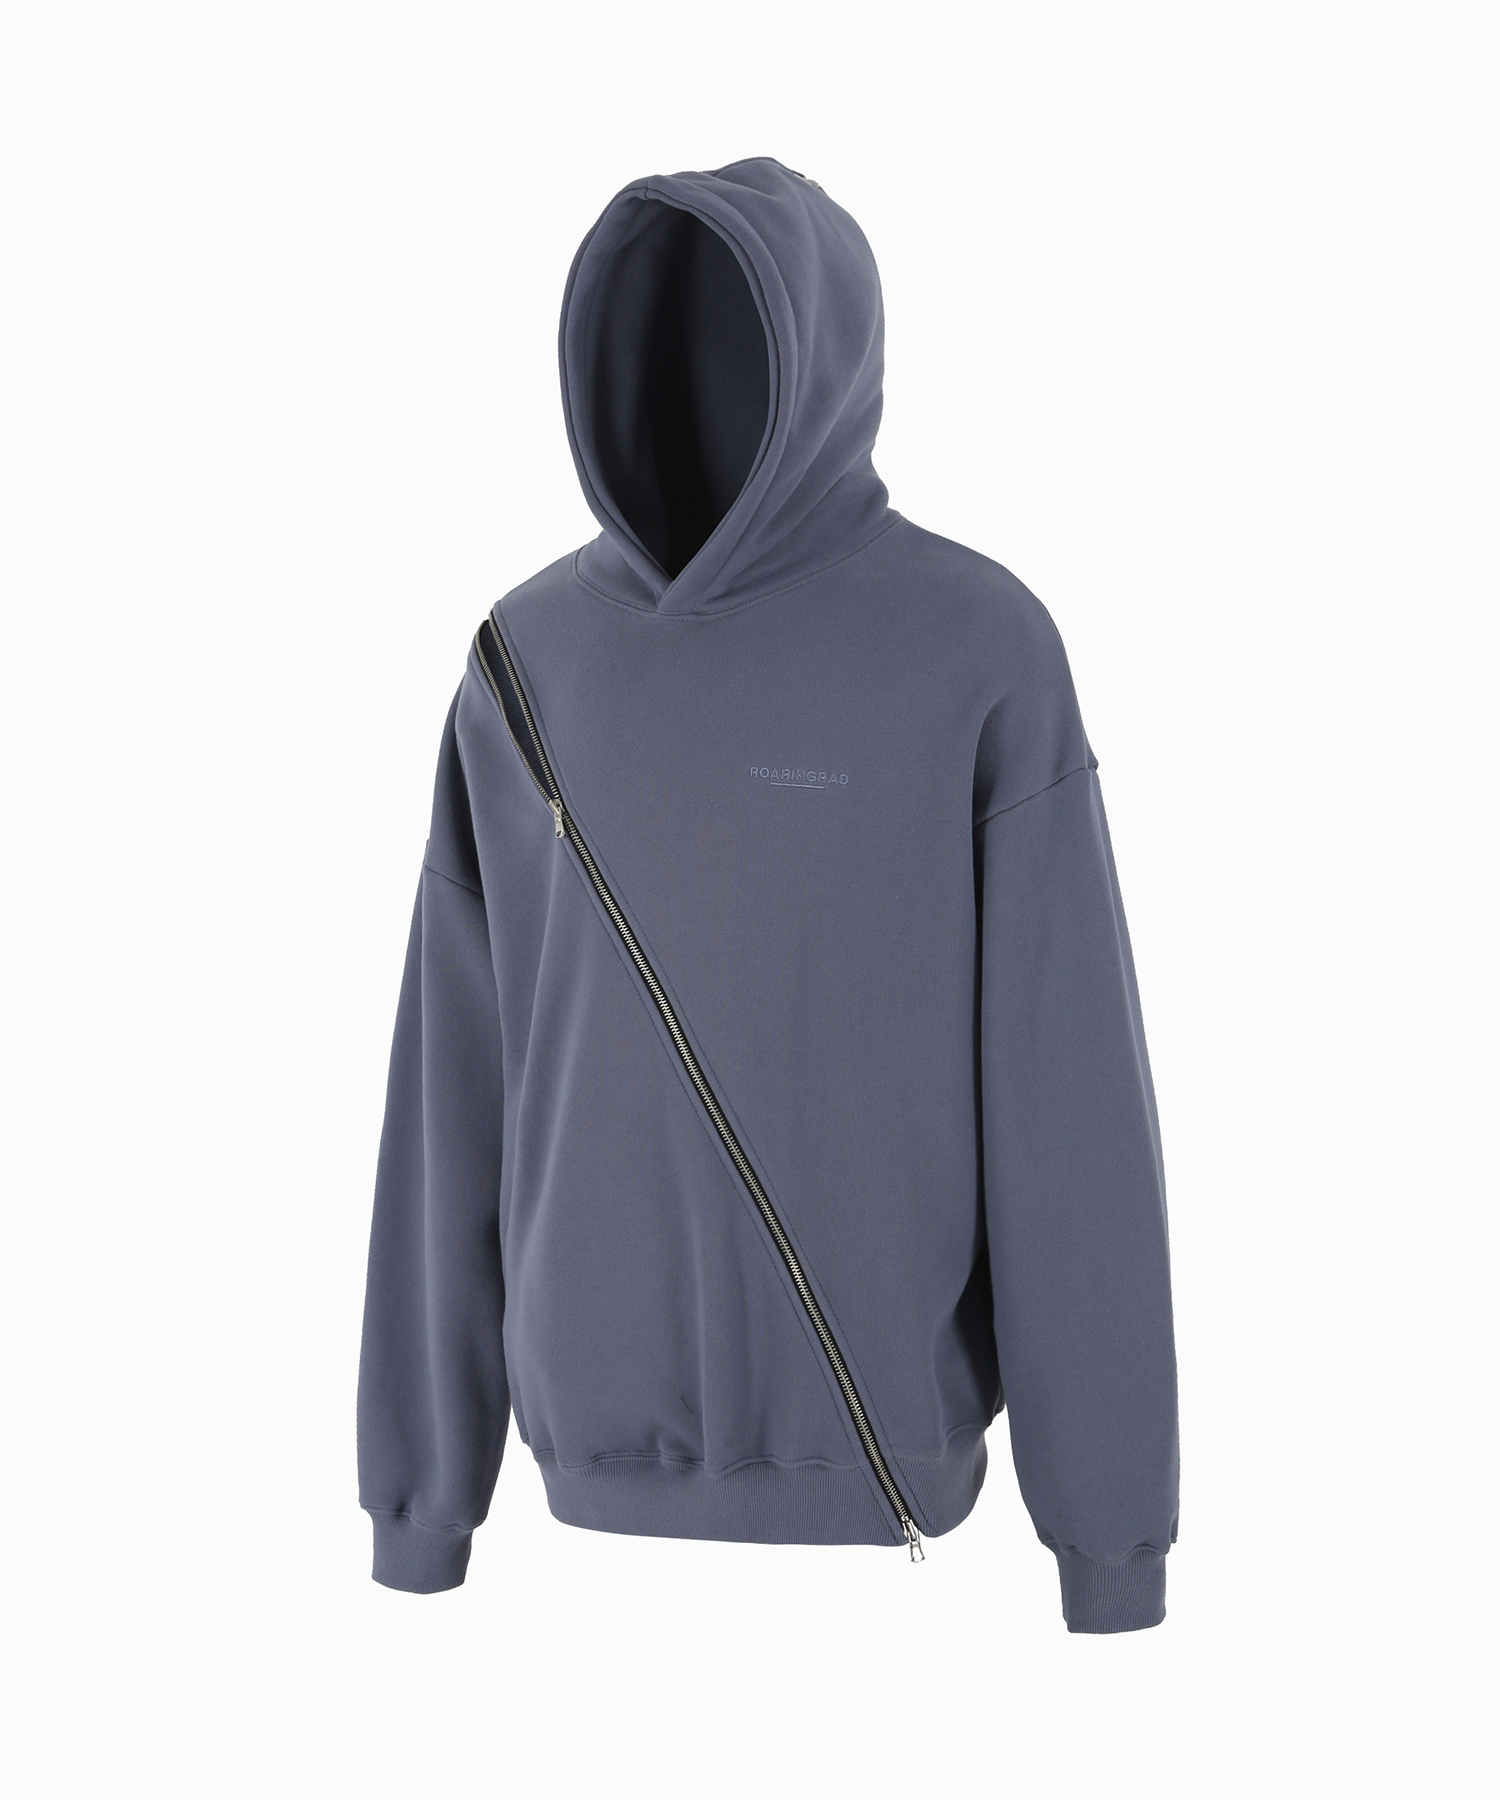 incision zipper over sweat hoodie light blue - 로어링라드(ROARINGRAD)